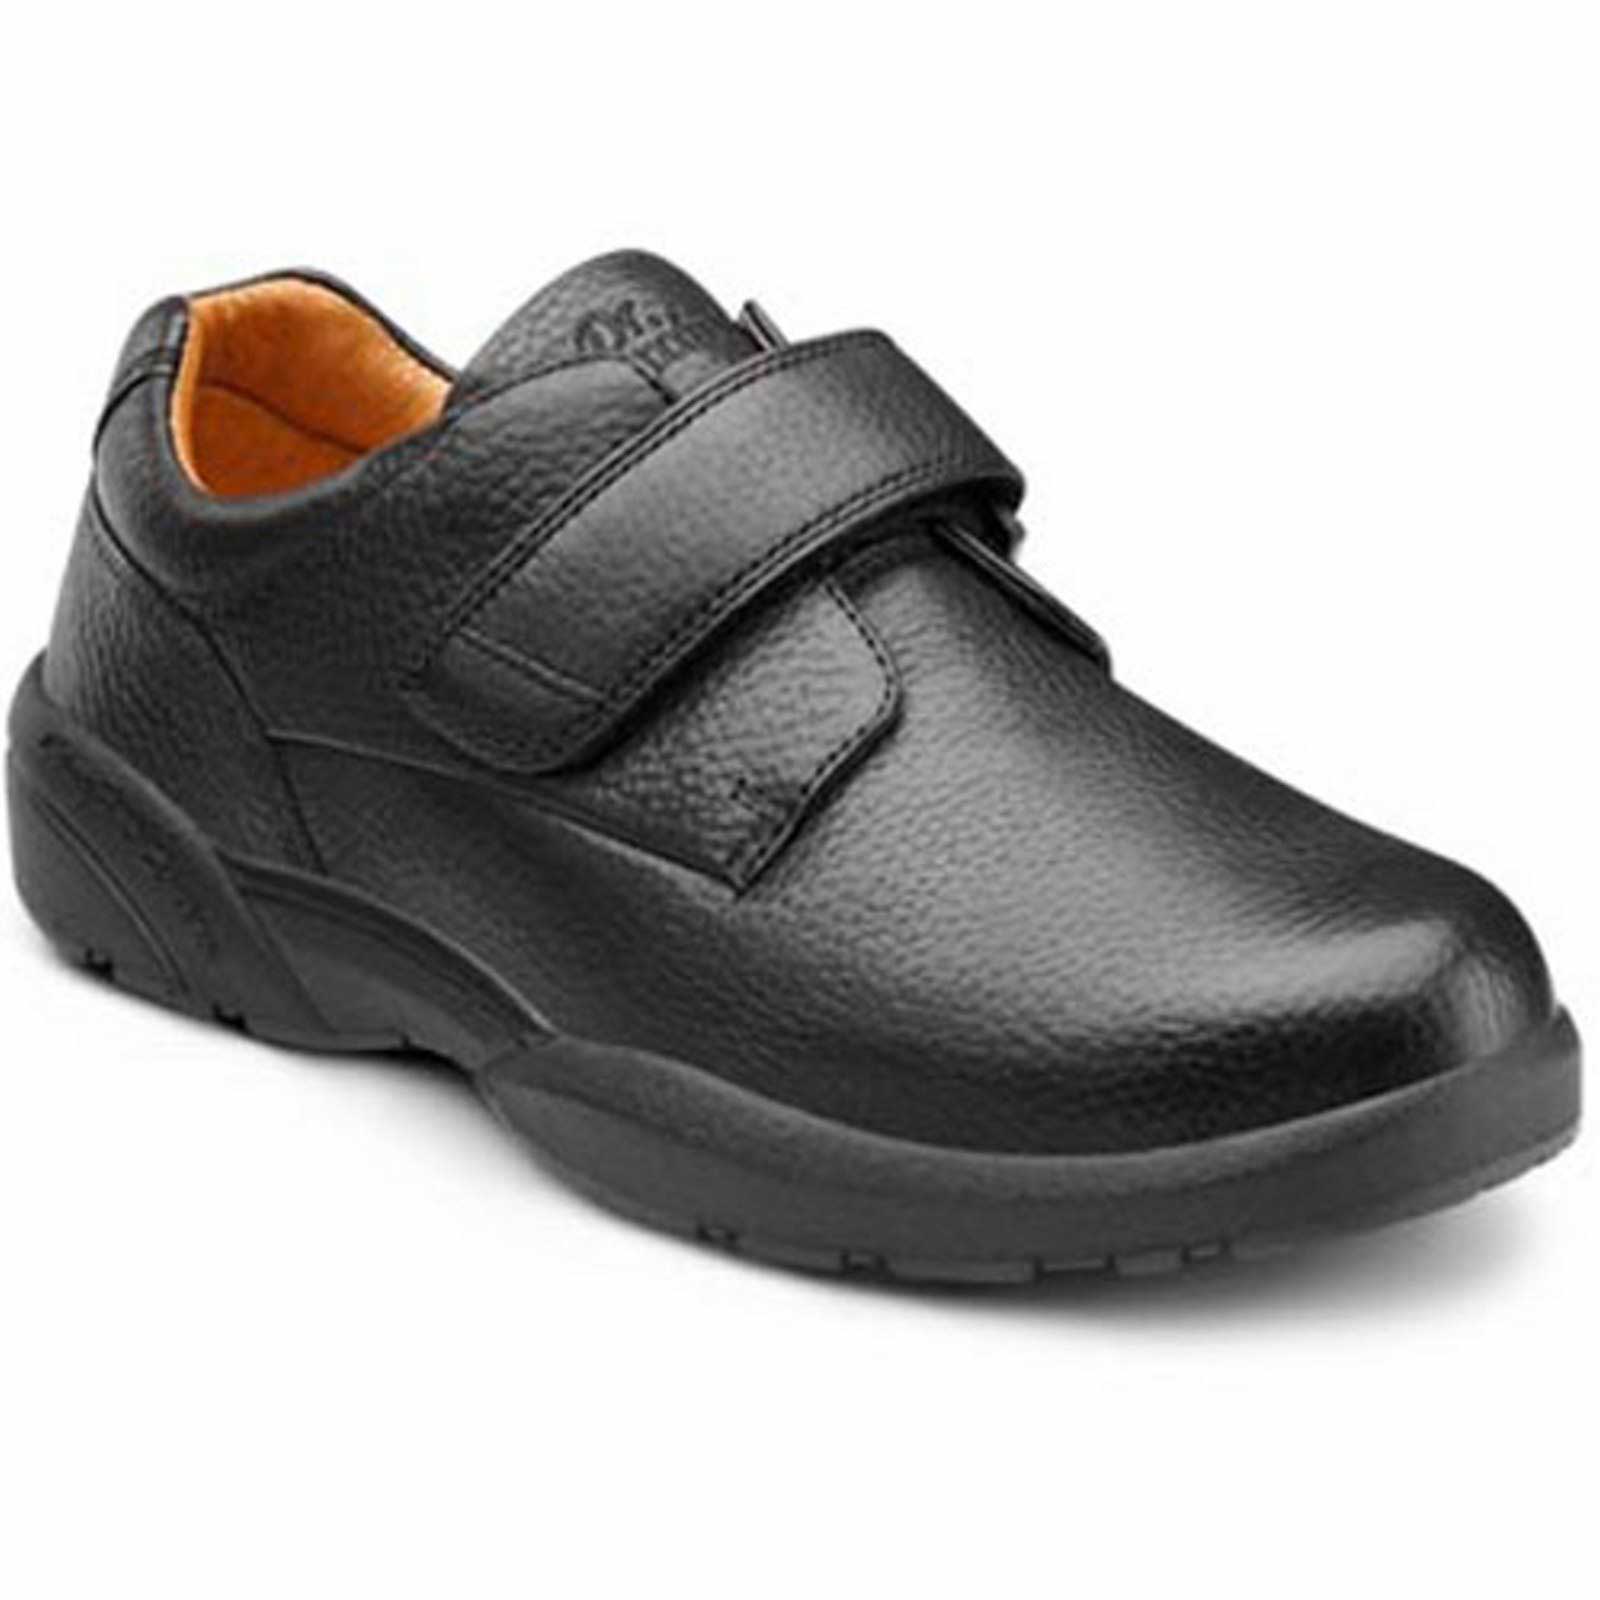 Dr. Comfort size 11w dress shoes